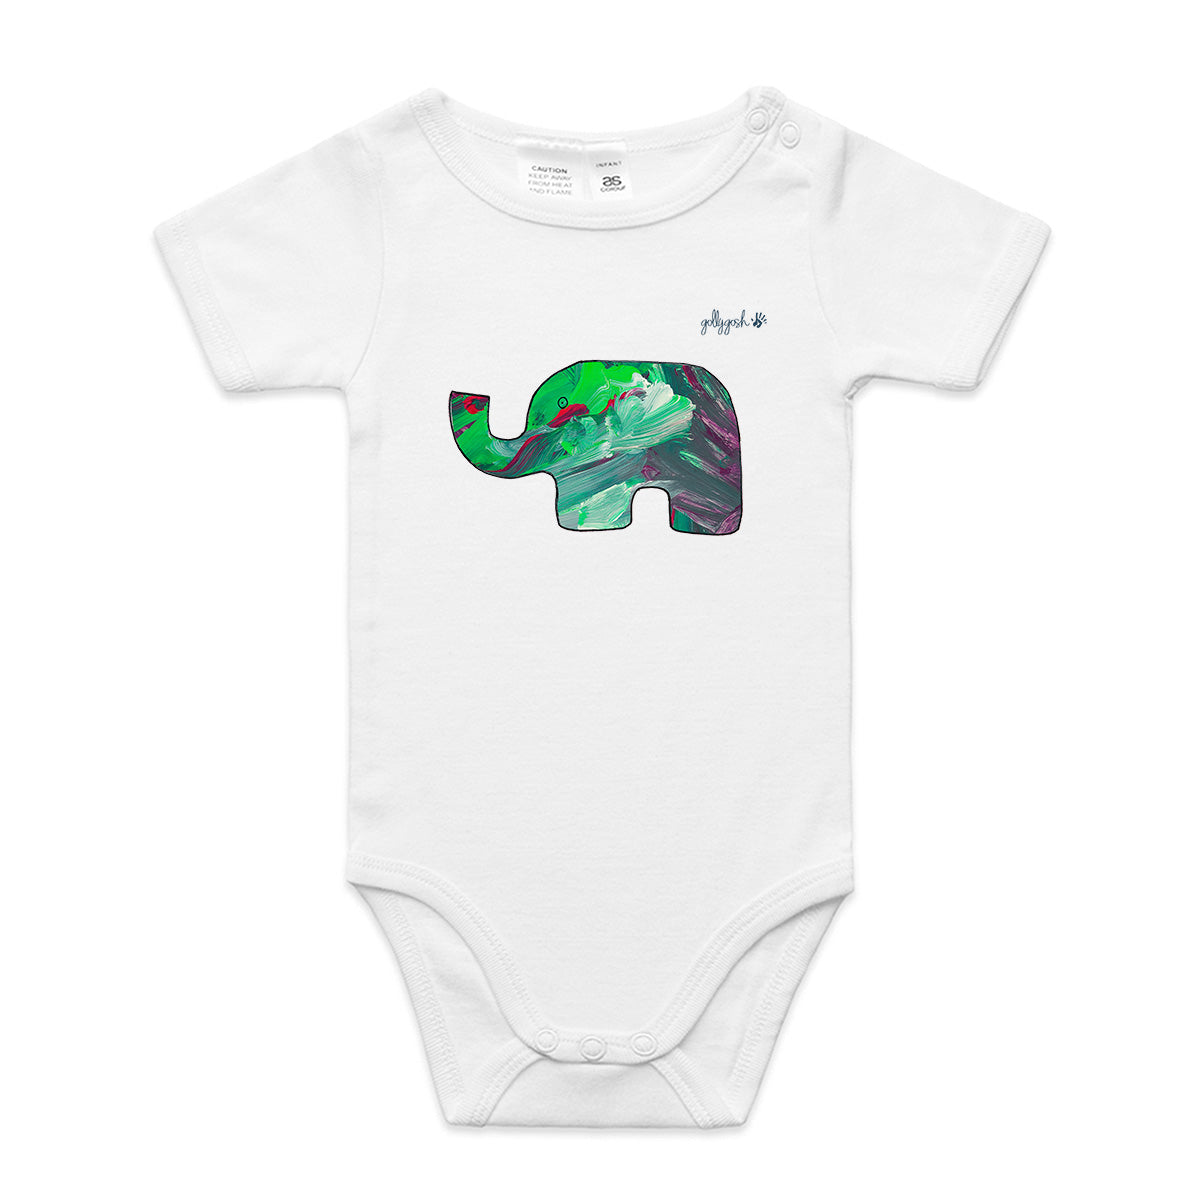 Elephant - Infant Baby Grow